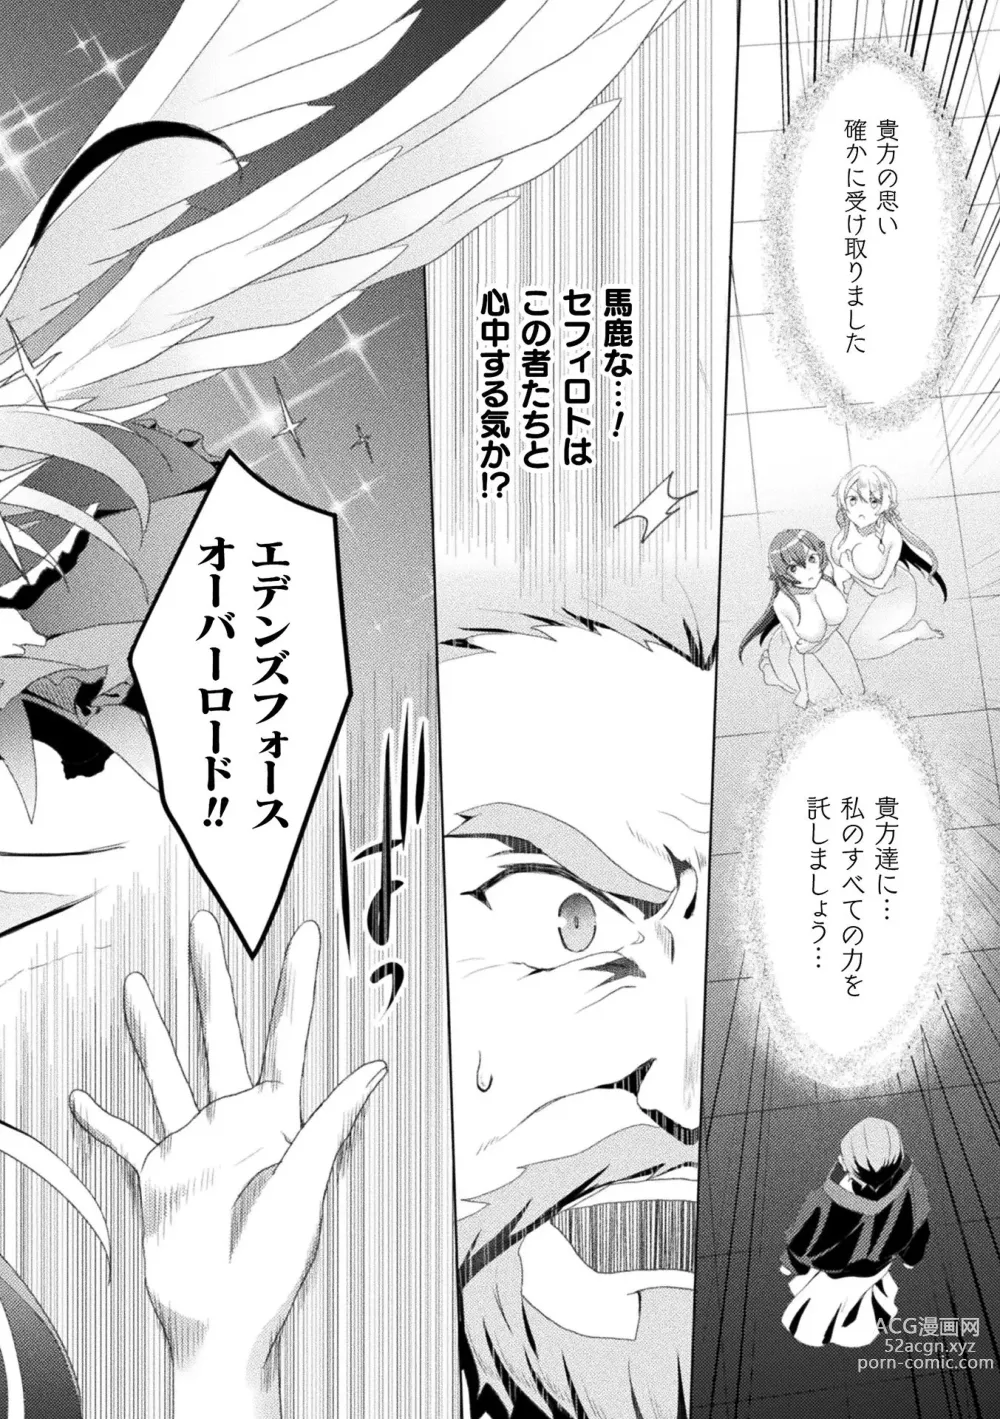 Page 217 of manga Edens Ritter - Inetsu no Seima Kishi Lucifer Hen THE COMIC Ch. 1-8